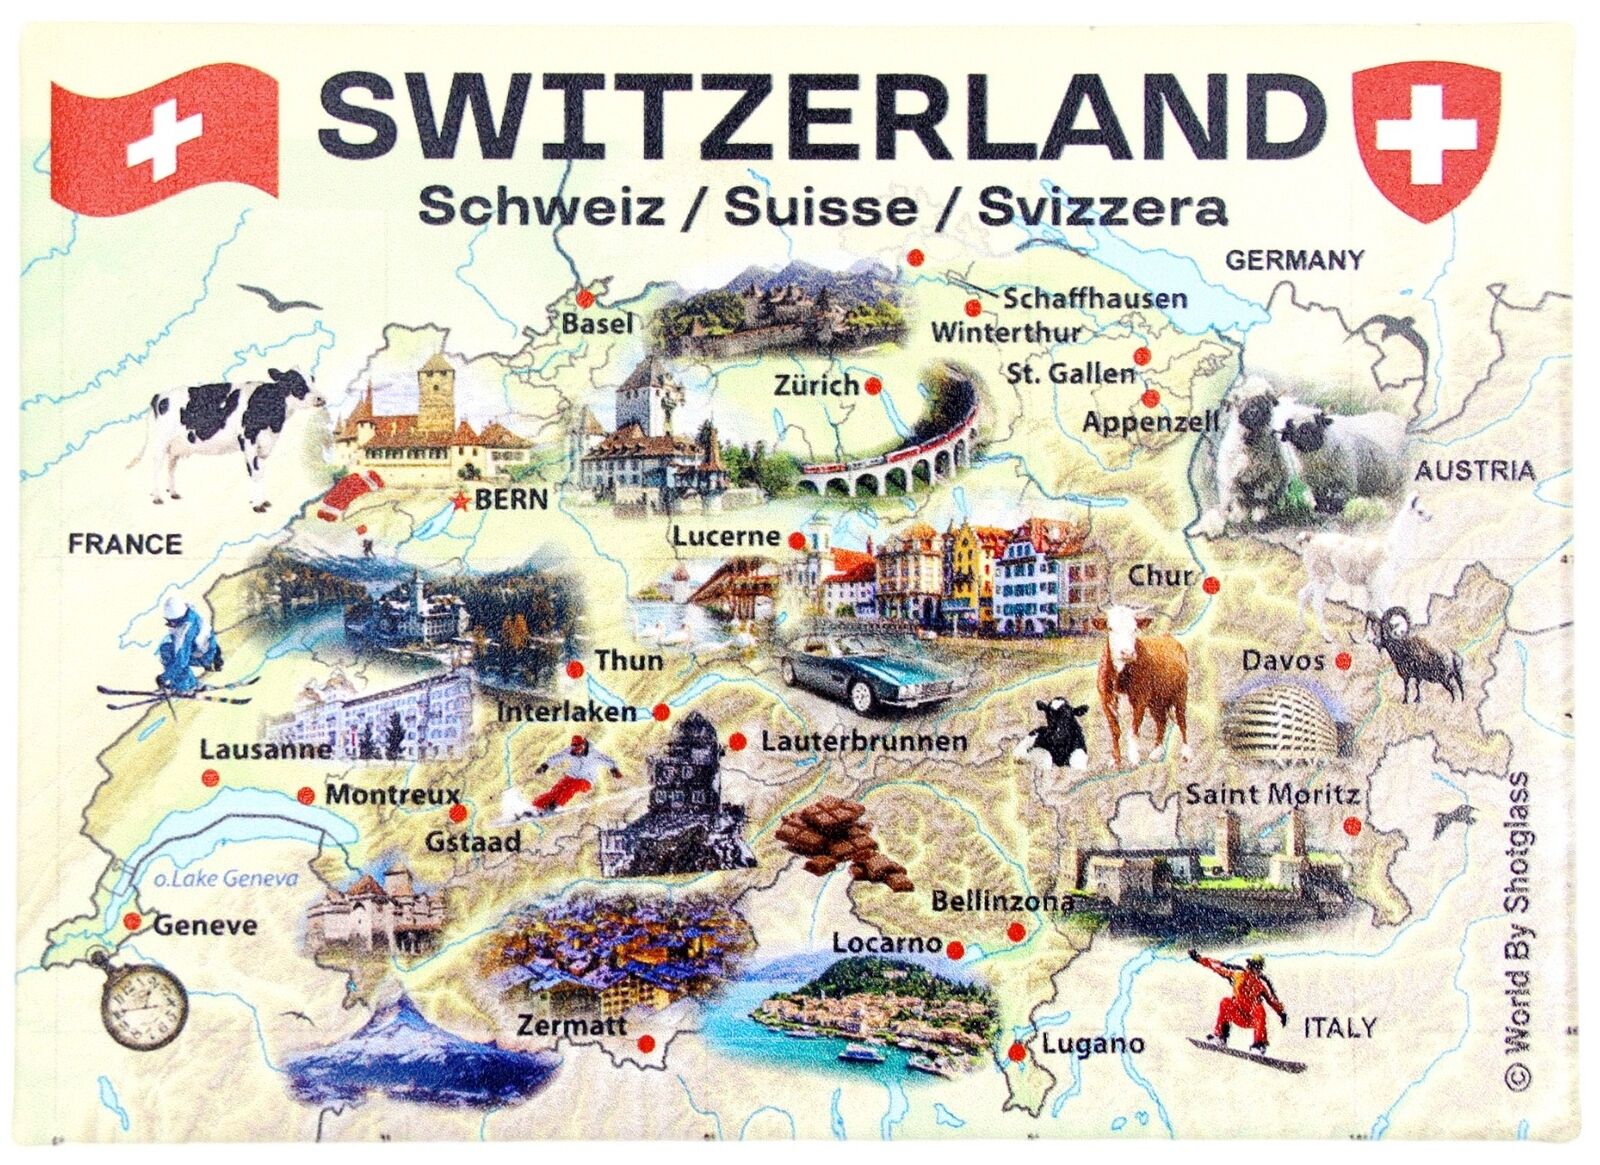 Switzerland Graphic Map and Attractions Souvenir Fridge Magnet 2.5